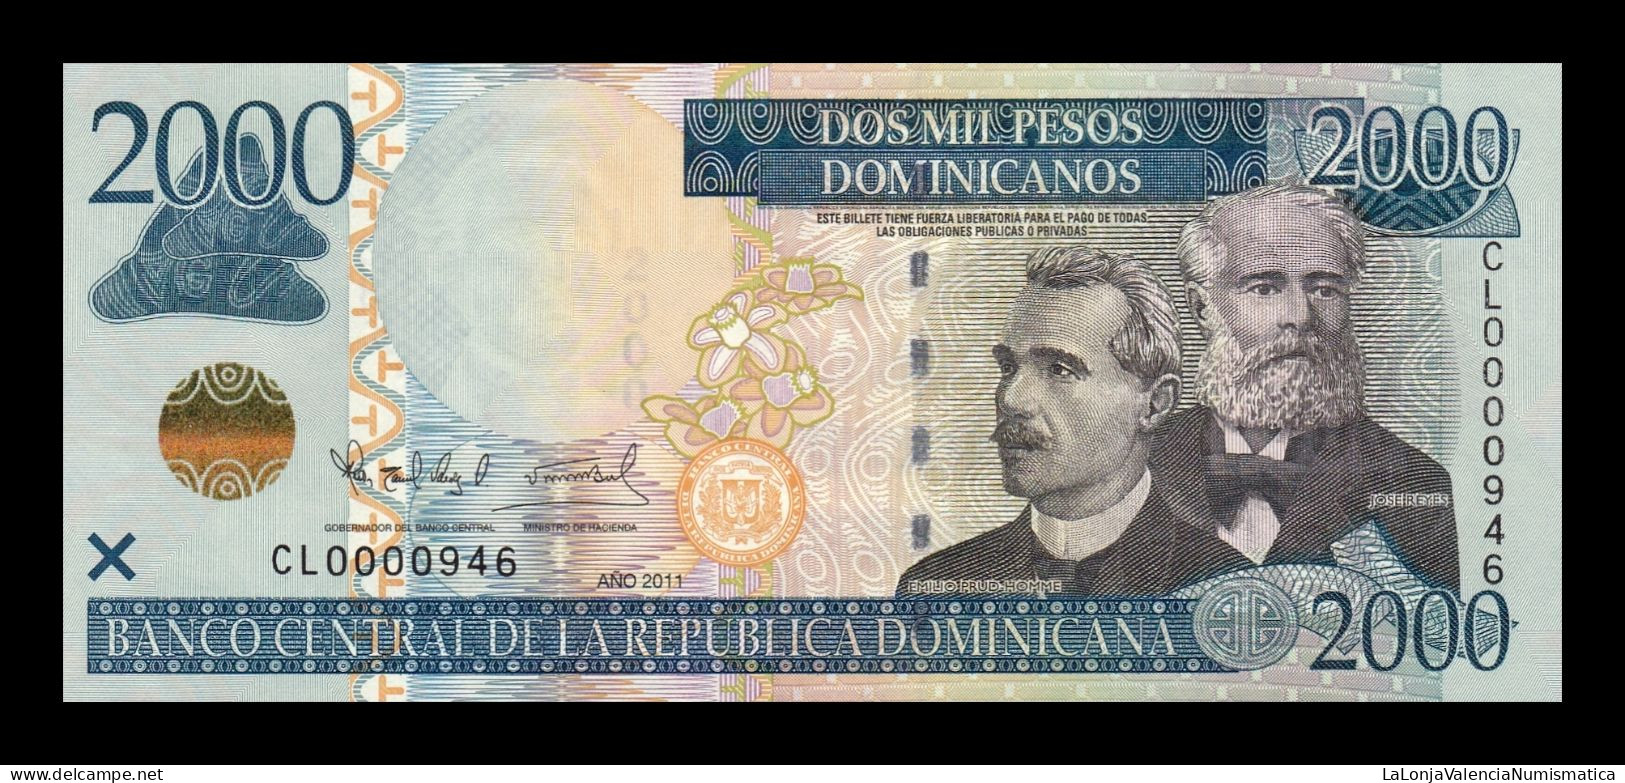 República Dominicana 2000 Pesos Dominicanos 2011 Pick 188a Low Serial 946 Sc Unc - Dominicaine